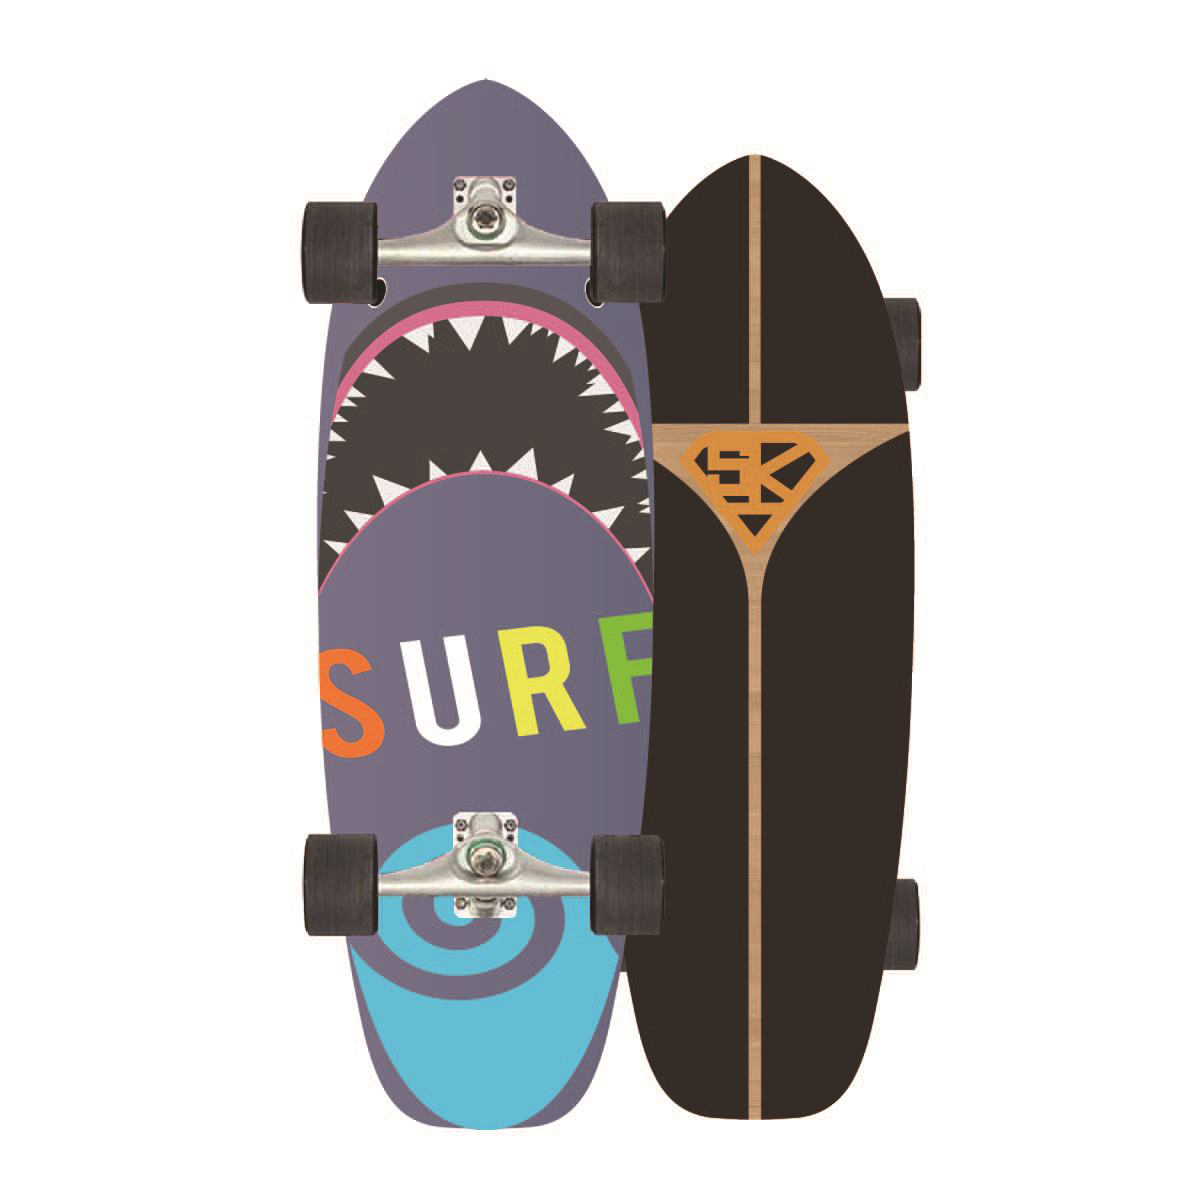 Asile SurfSkate เซิร์ฟเสก็ต CX4 สเก็ตบอร์ด Surf skateboard สามารถเลี้ยวซ้ายและขวา ส่งจาก กทม